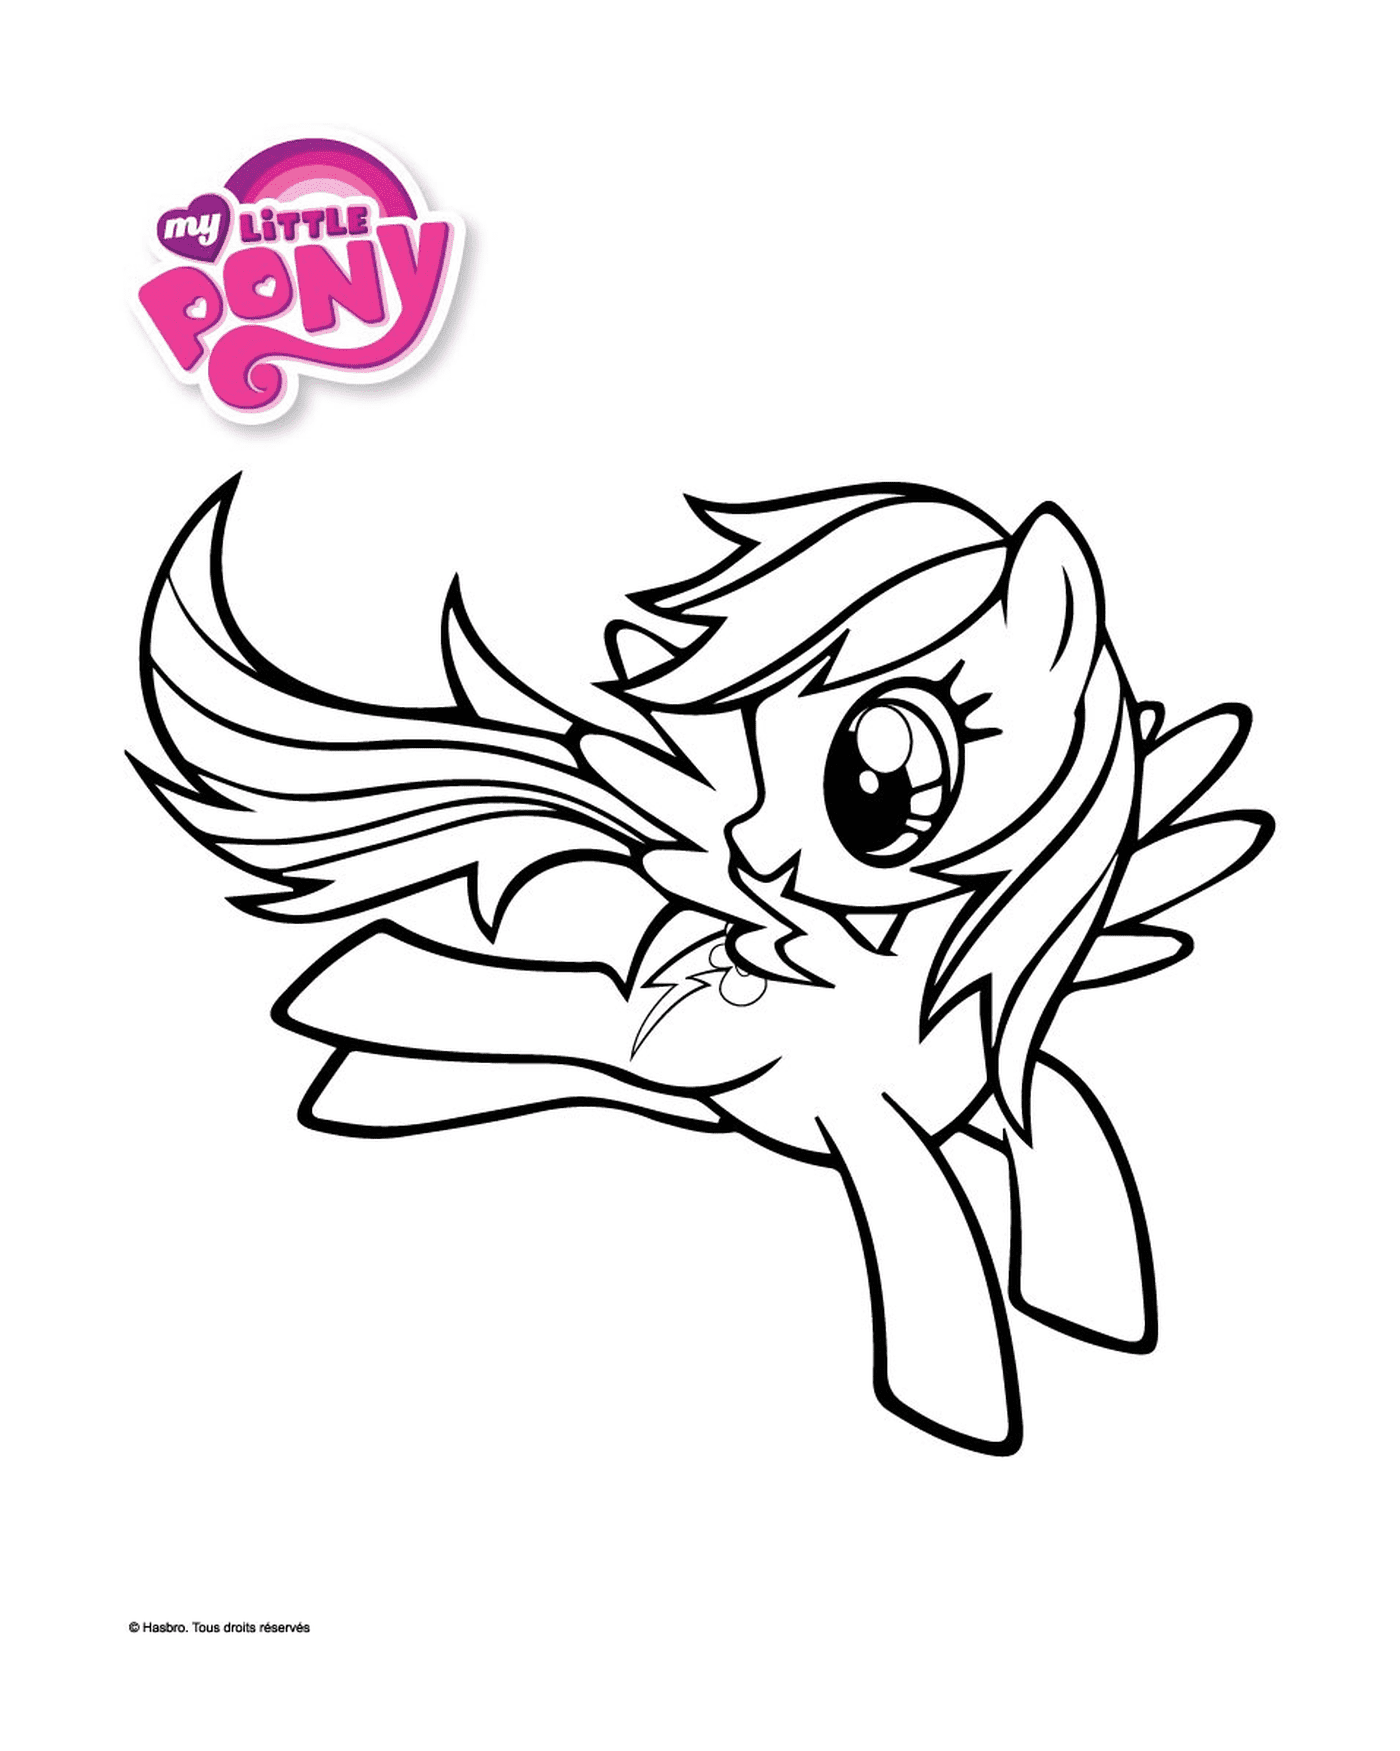  Rainbow Dash, the flying pony 